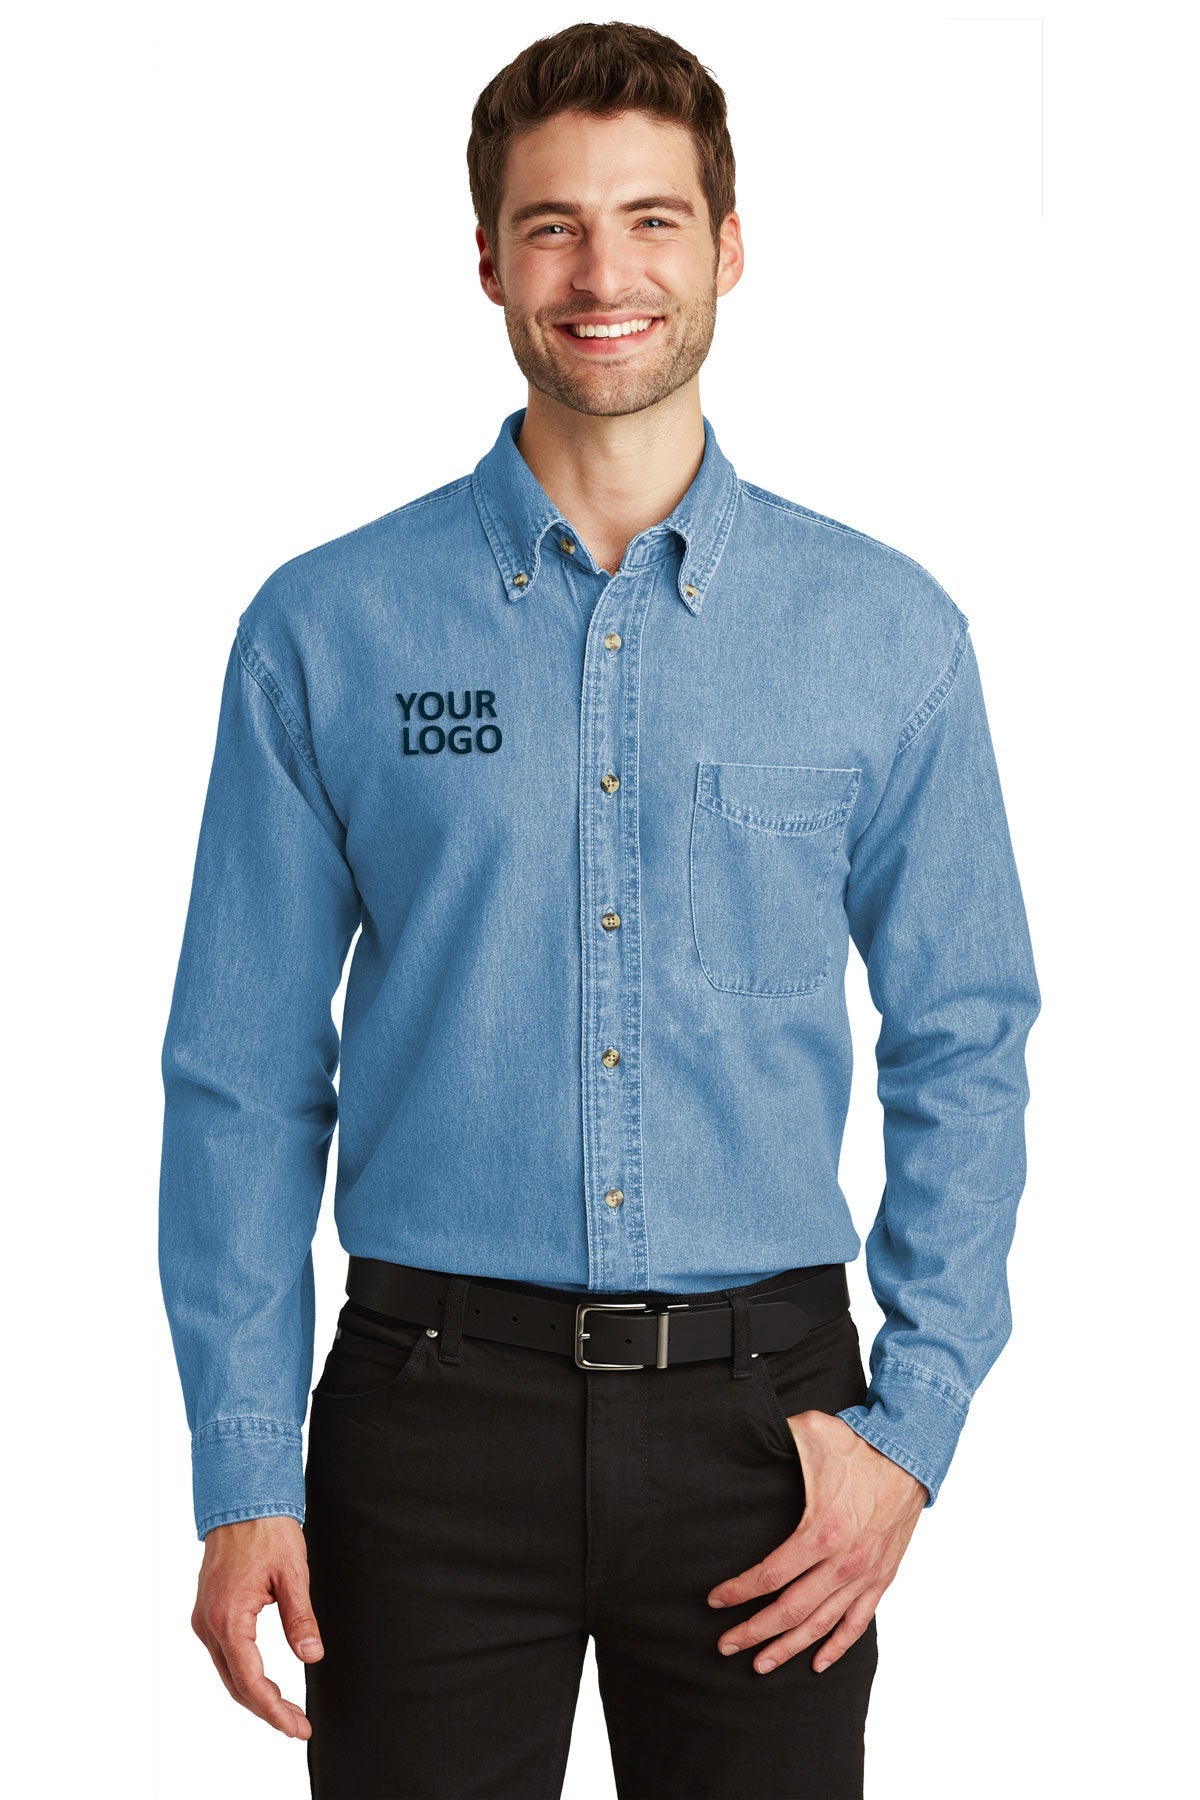 Port Authority Long Sleeve Denim Shirt S600 Faded Denim*